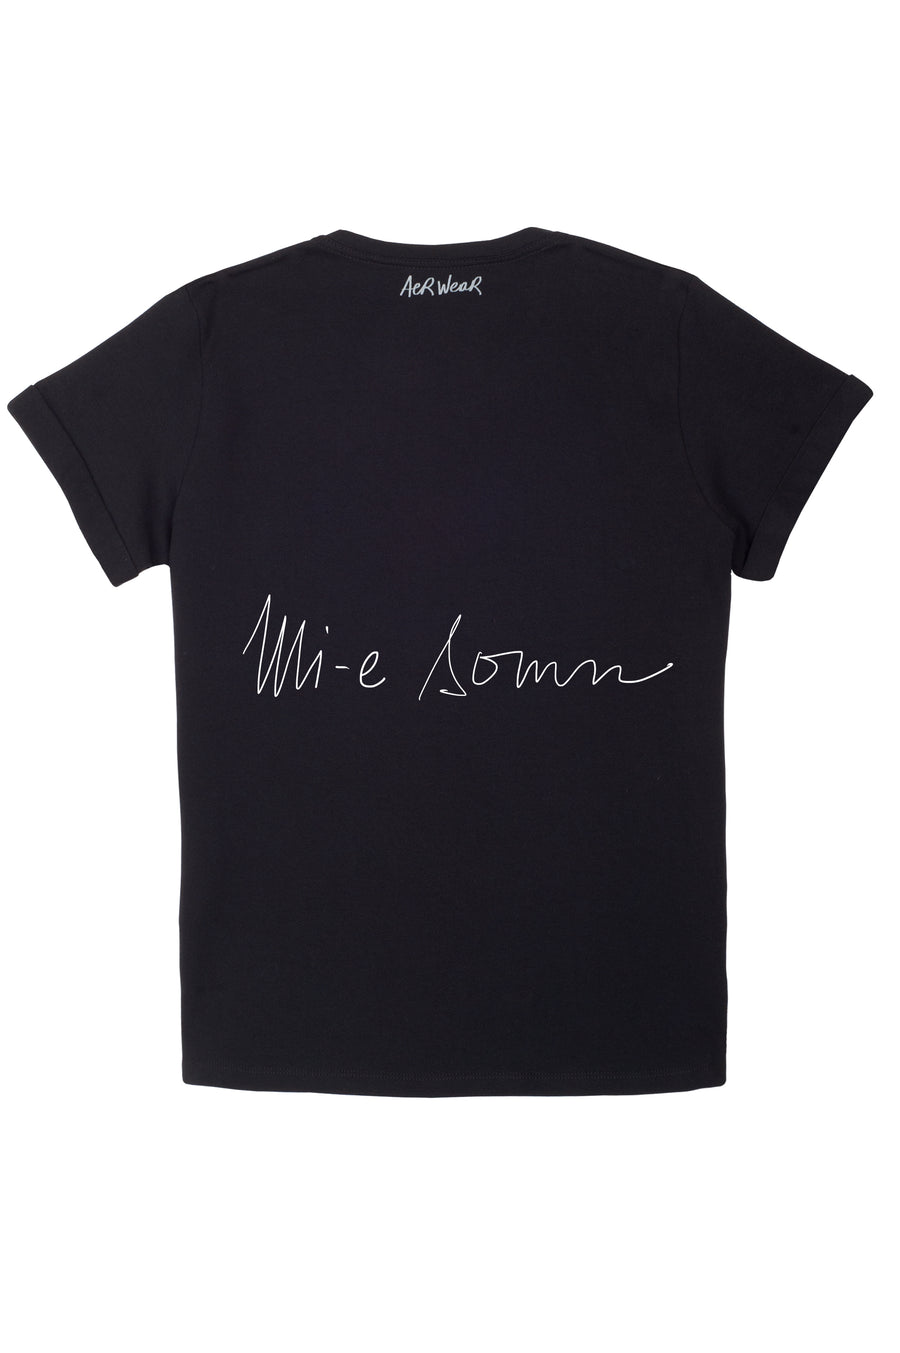 MI-E SOMN Tshirt Black version